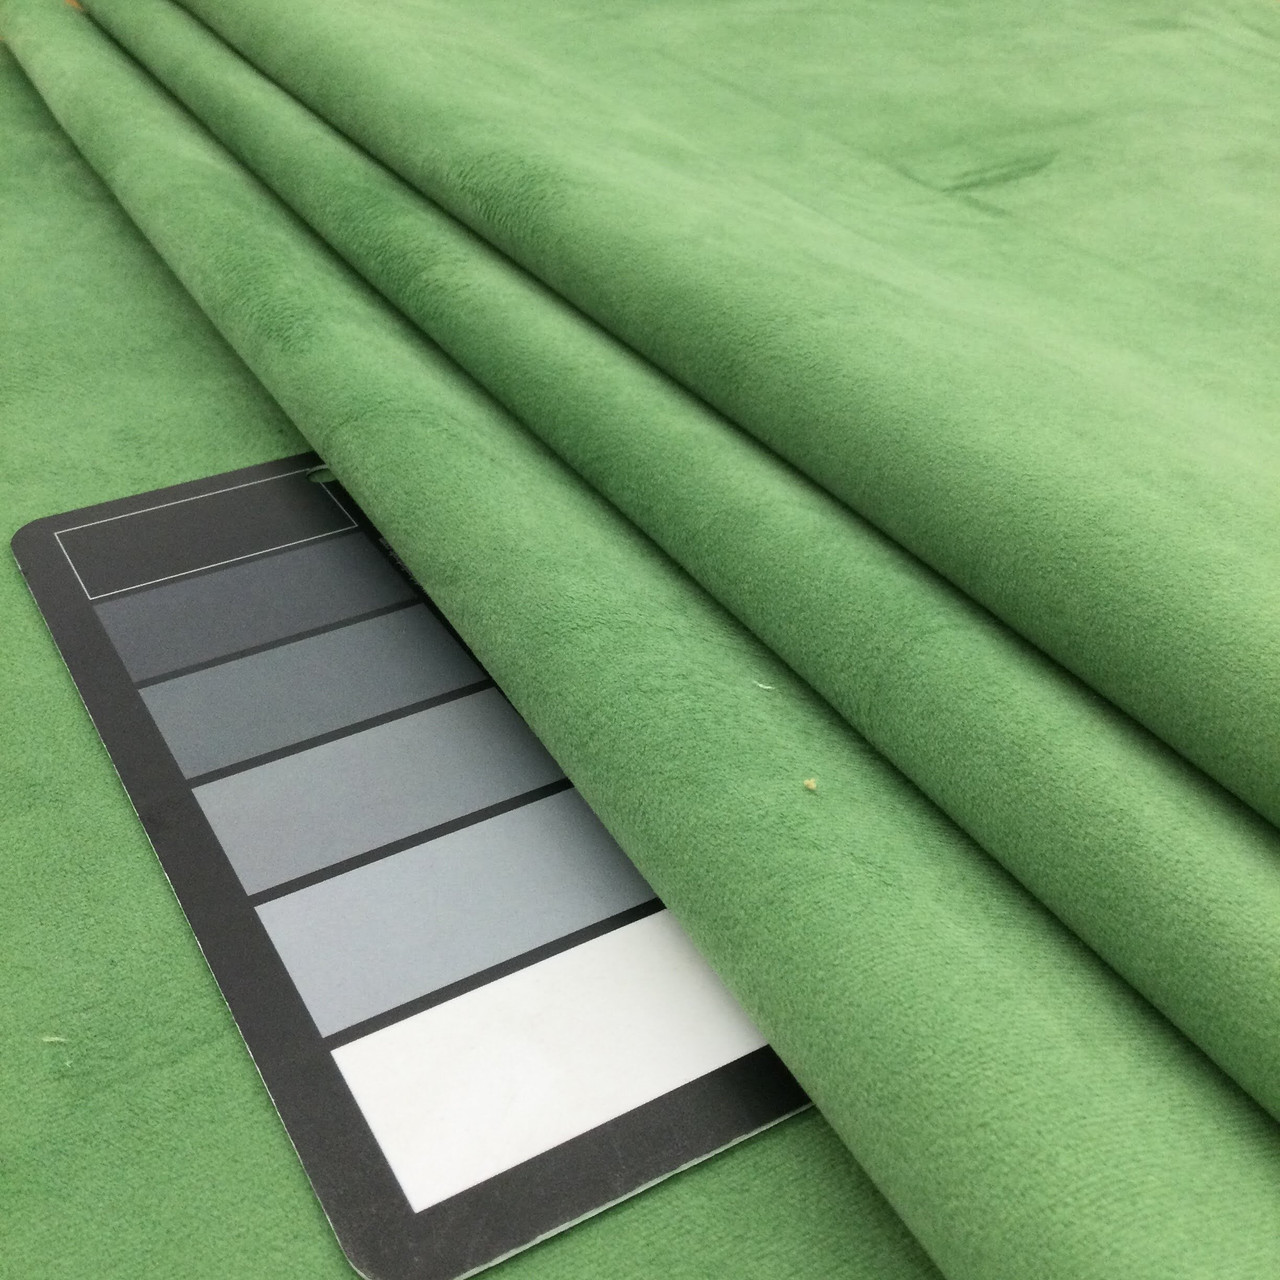 HHF Alamo Apple Green - Linen Like Upholstery Fabric